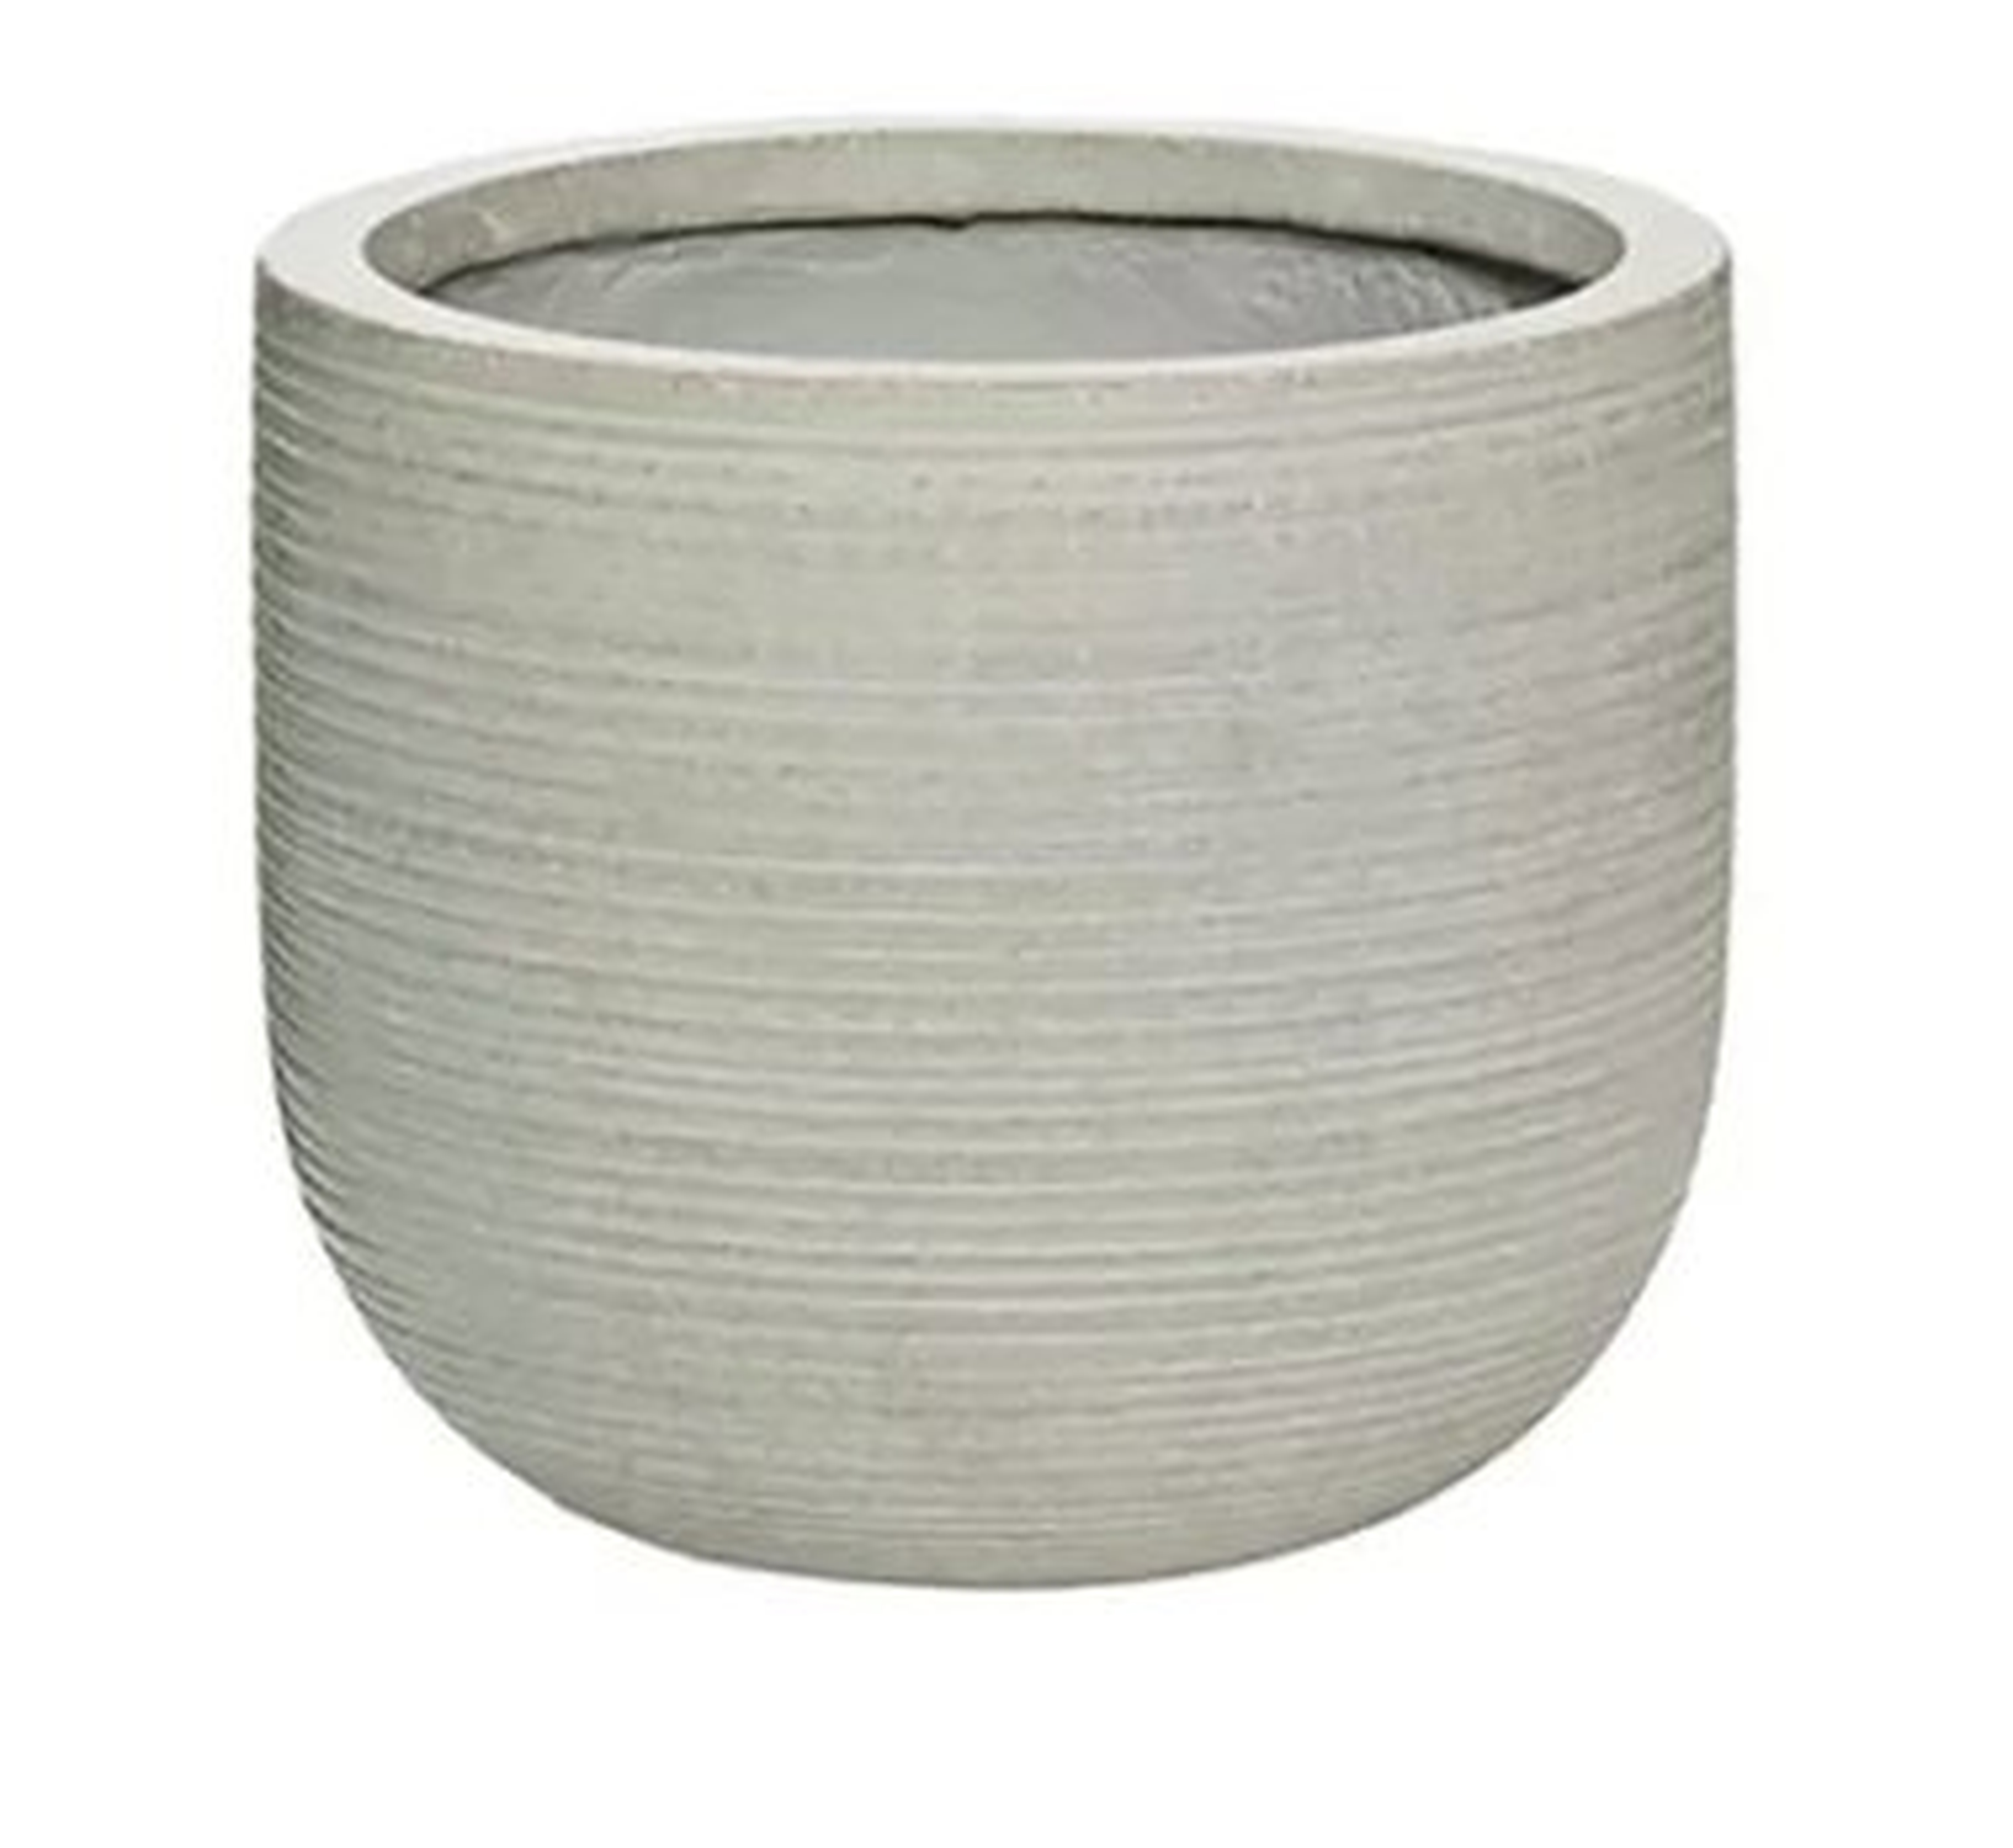 Clarion Round Fiberstone Pot Planter - Wayfair